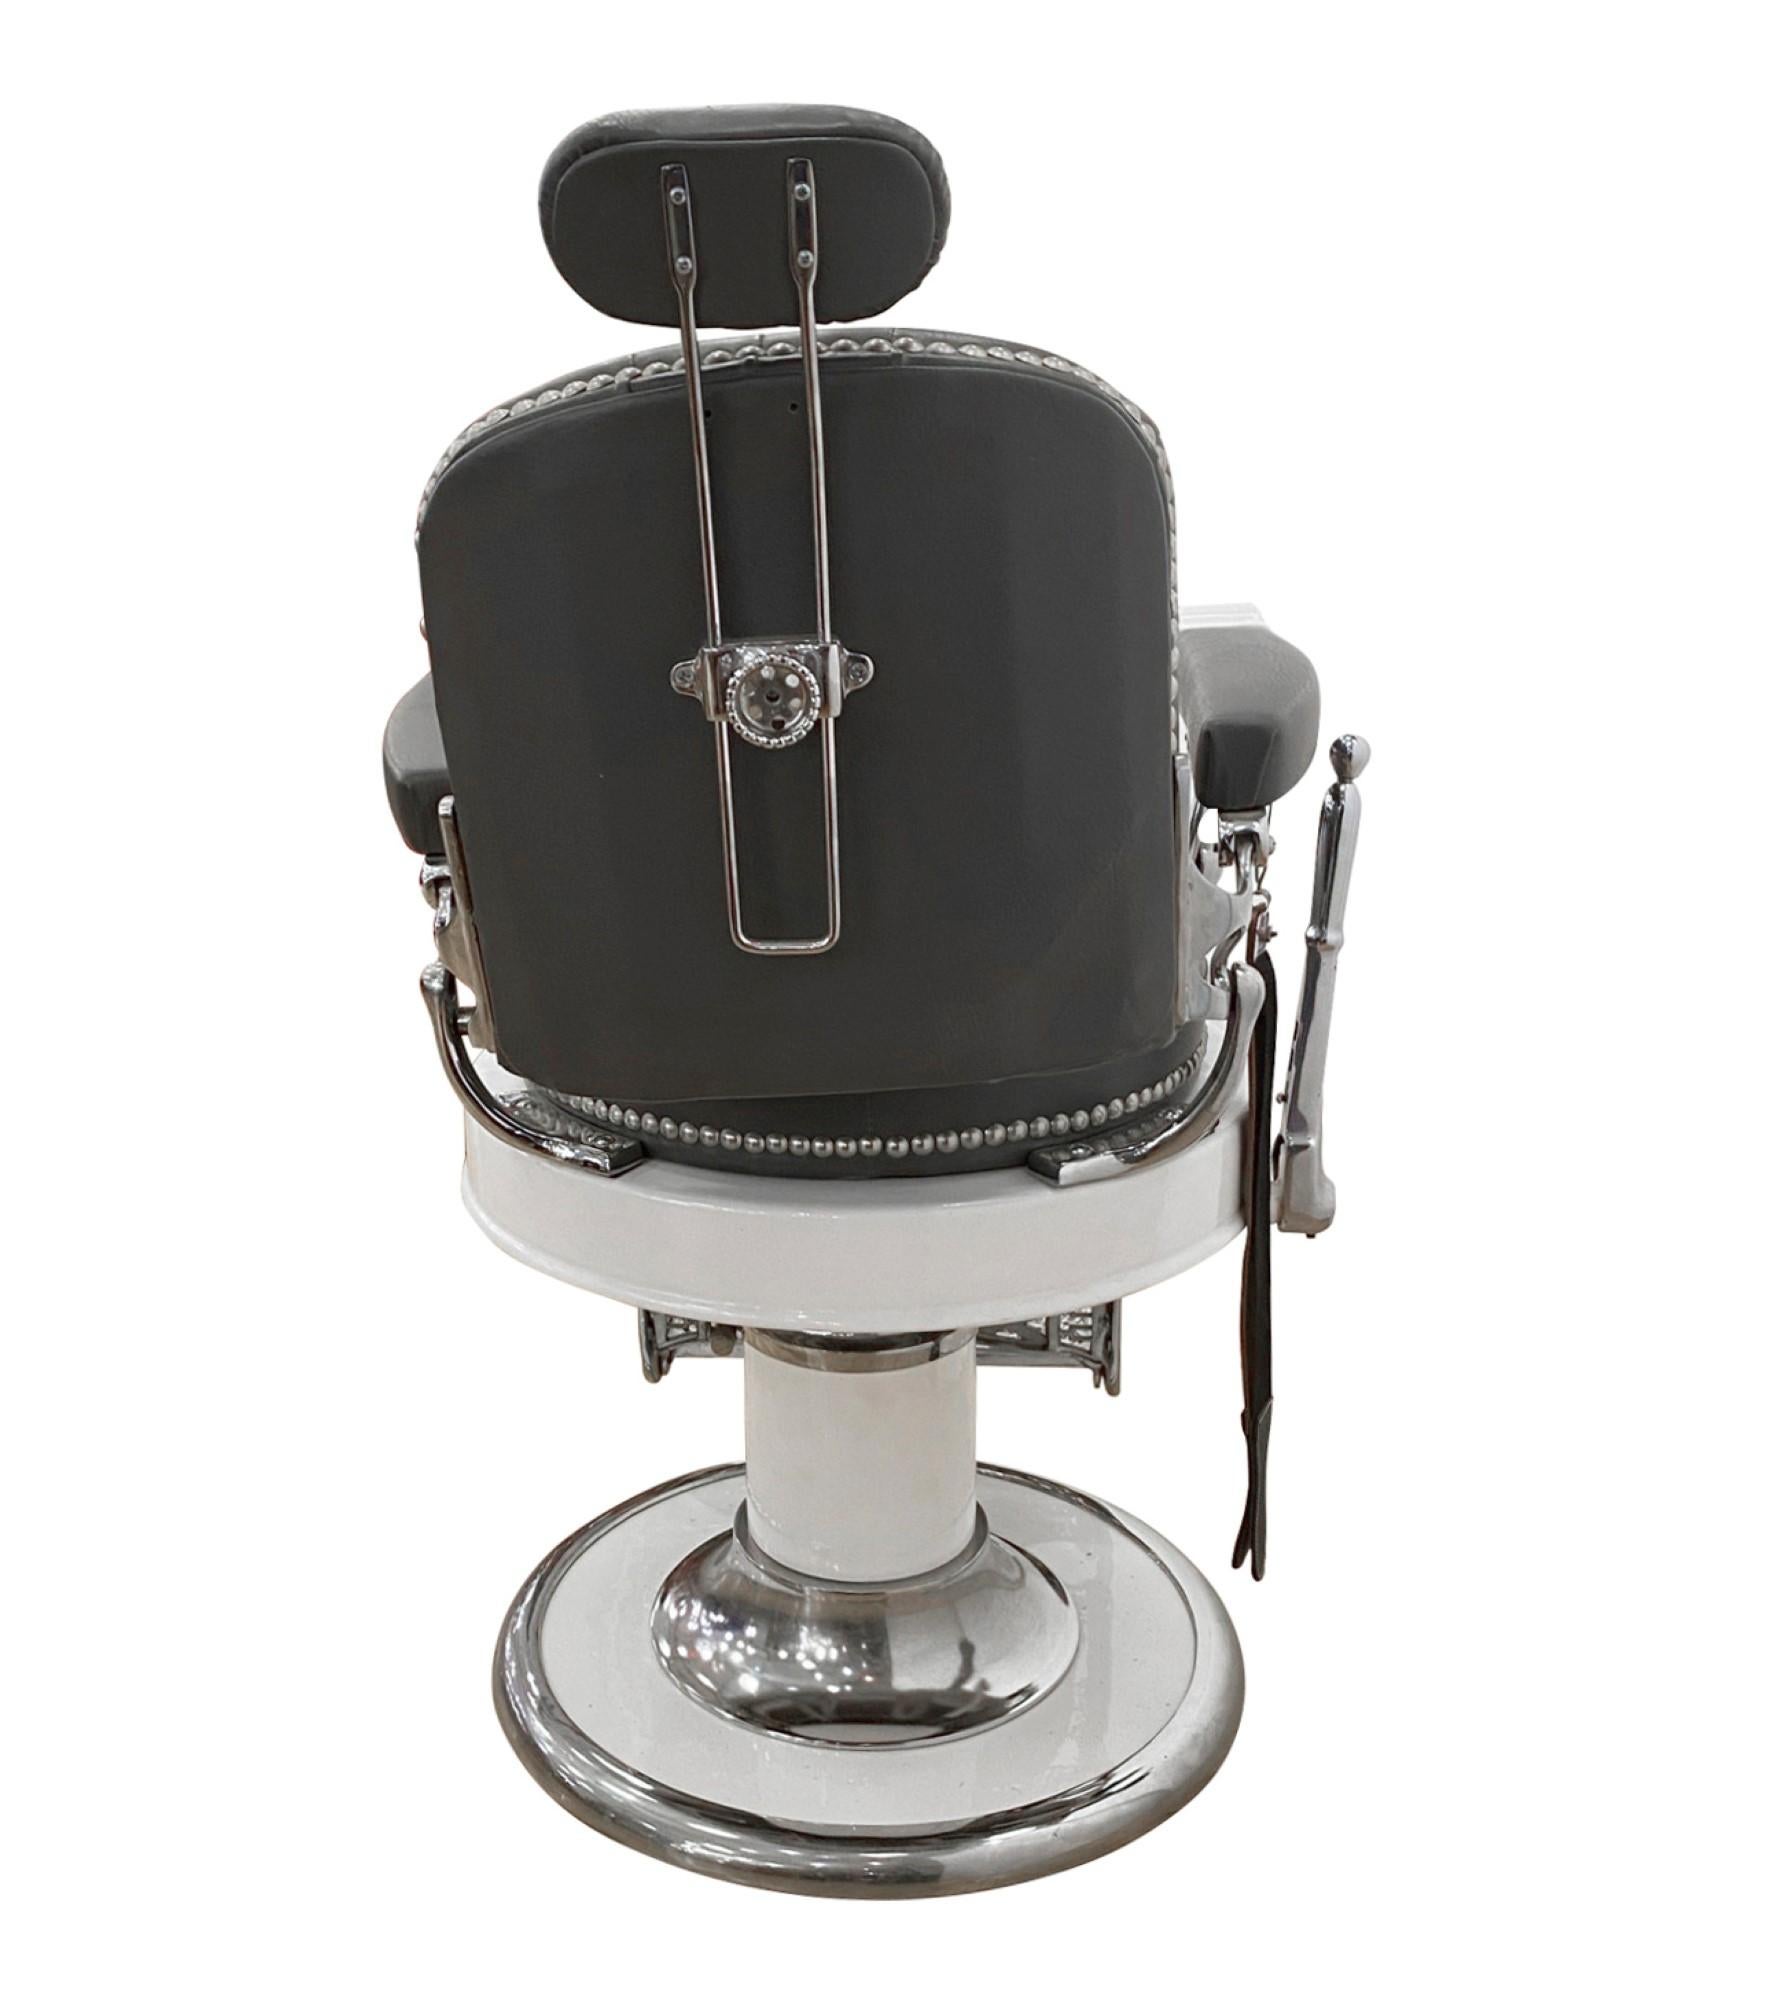 Restored 1930s Koken Barber Chair Gray & White Finish w/ Razor Sharpening Strip 5